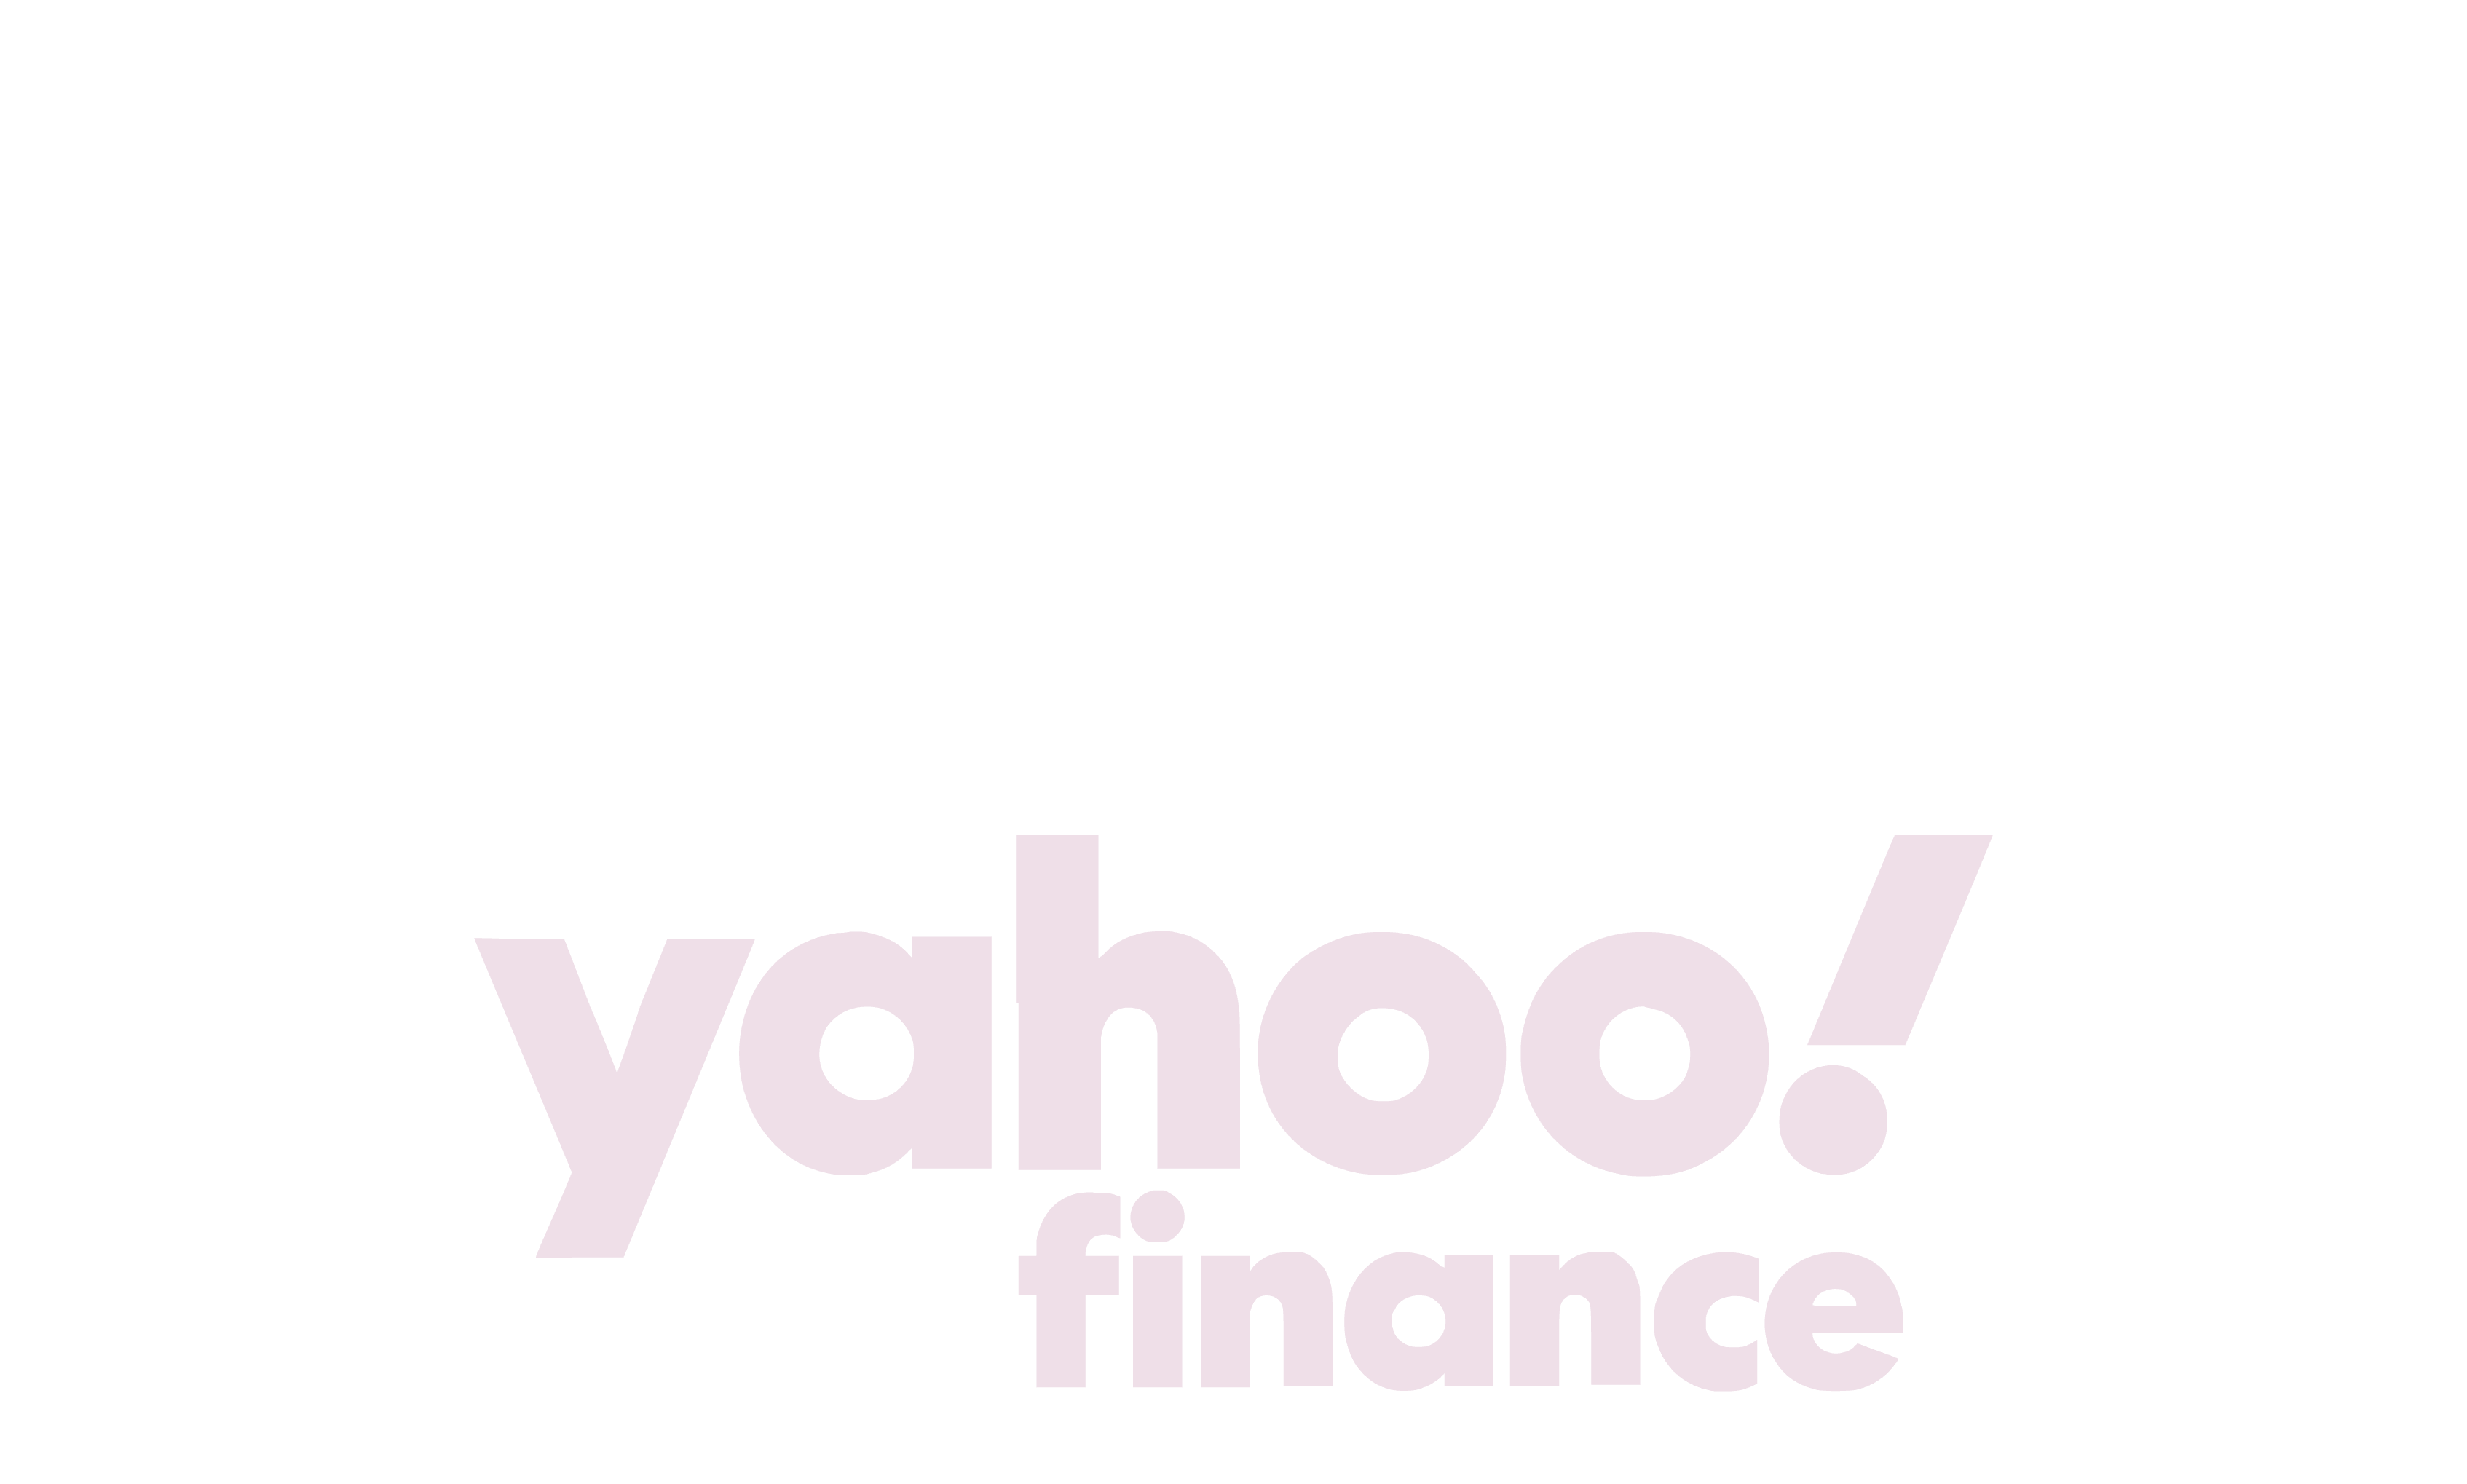 no bg mik network logos yahoo finance